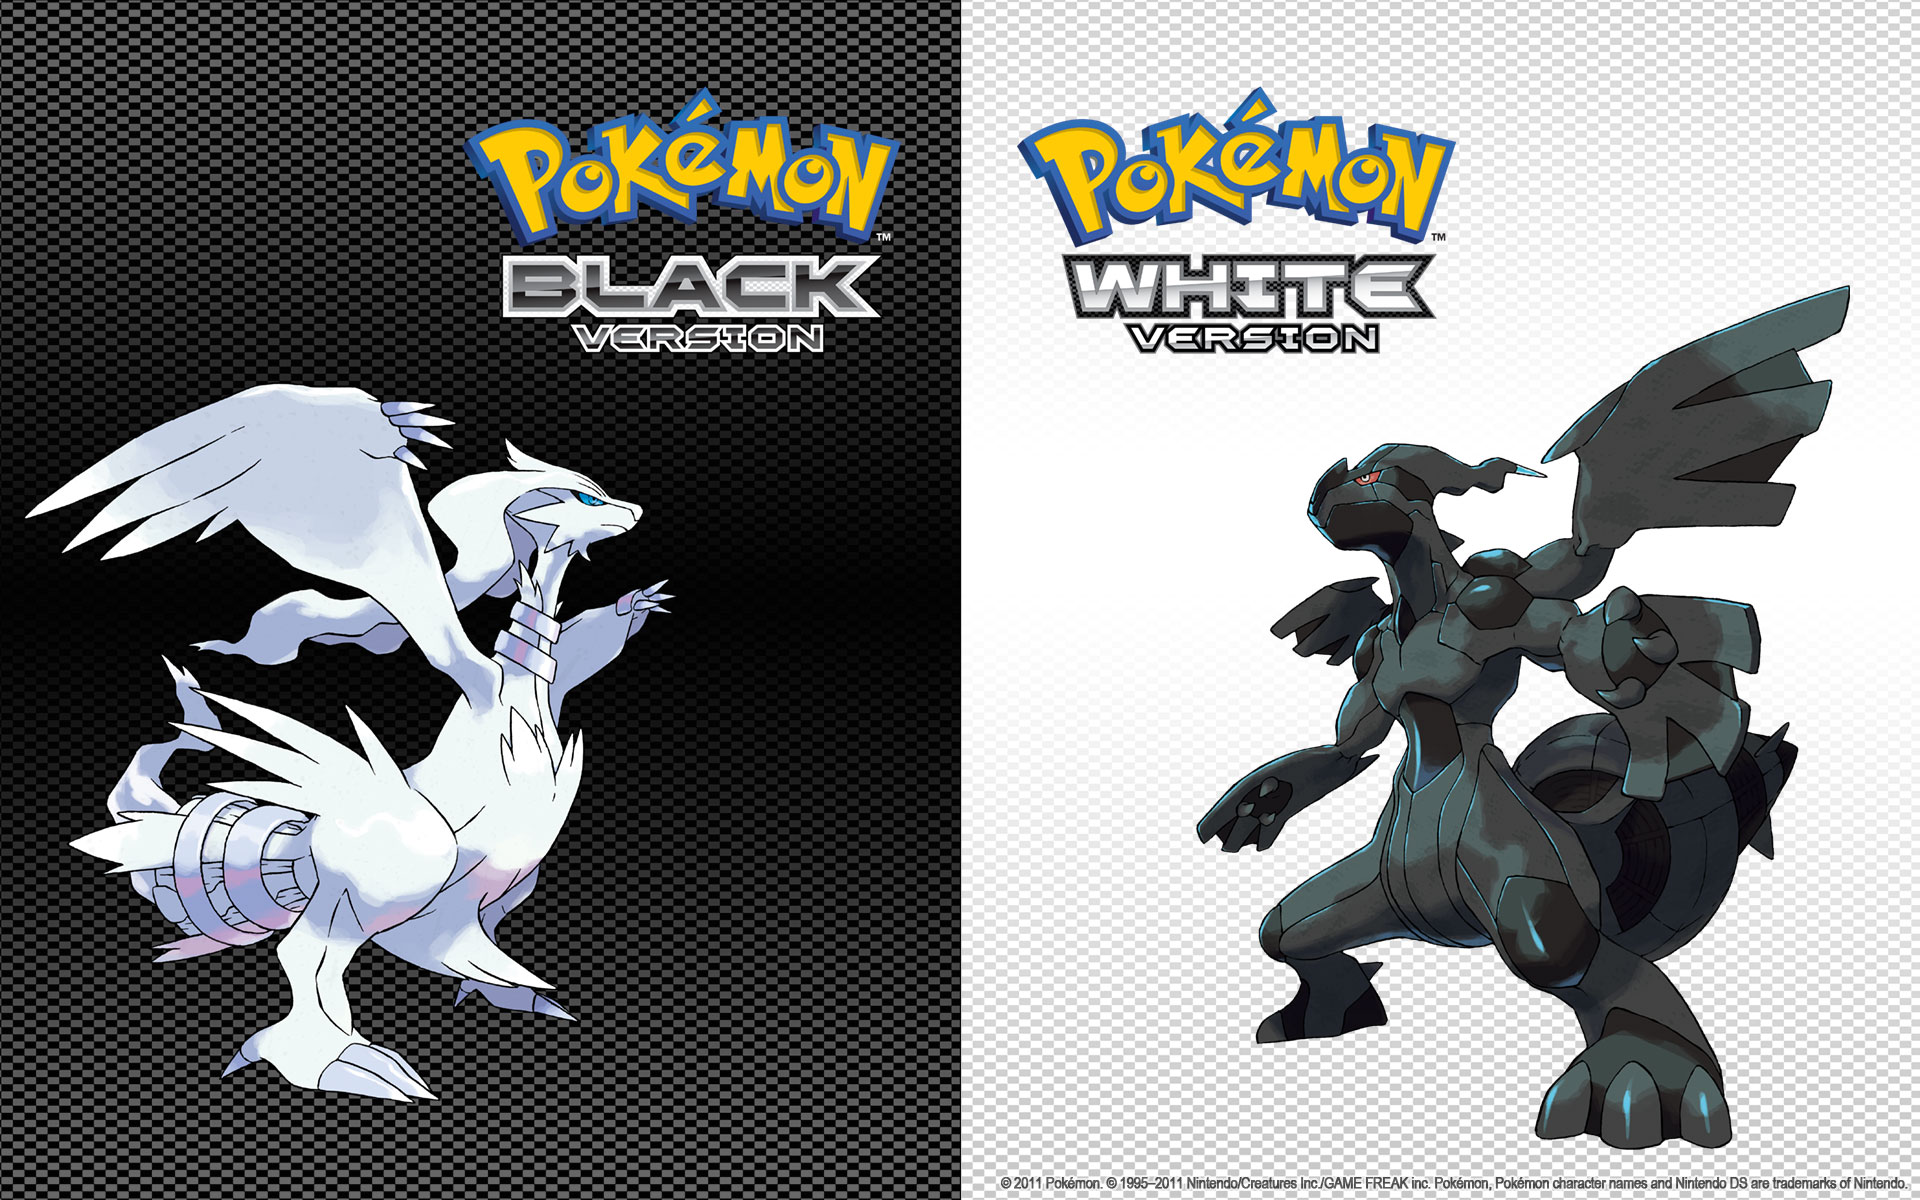 Pokémon Black Version, Nintendo DS, Jogos